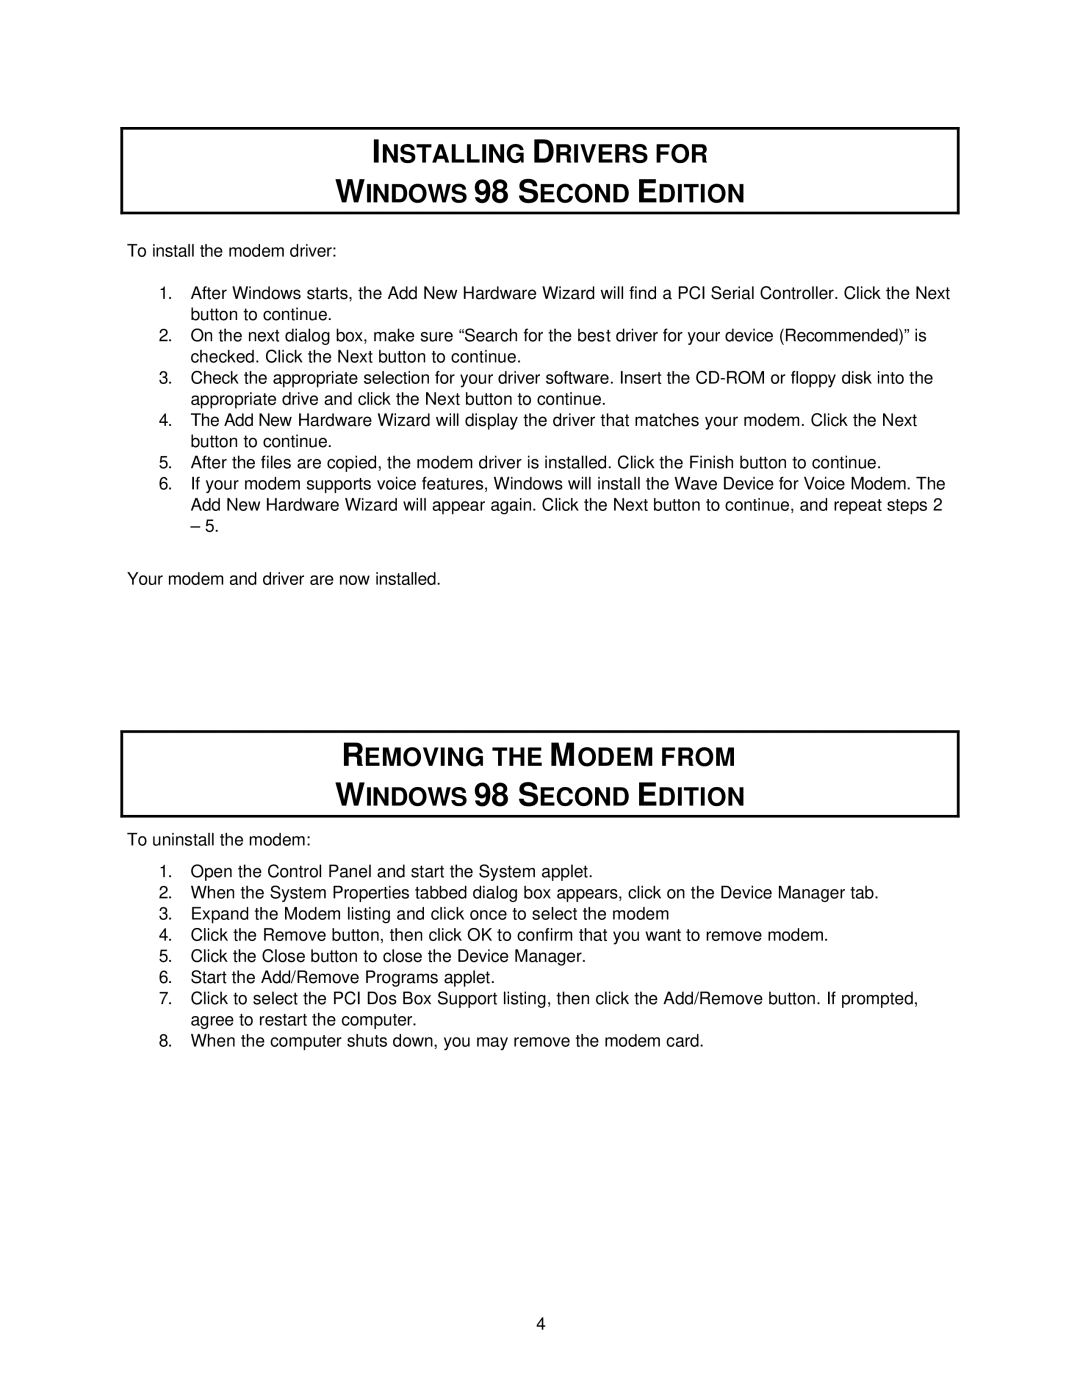 USRobotics 3Com manual Installing Drivers for Windows 98 Second Edition, Removing the Modem from Windows 98 Second Edition 